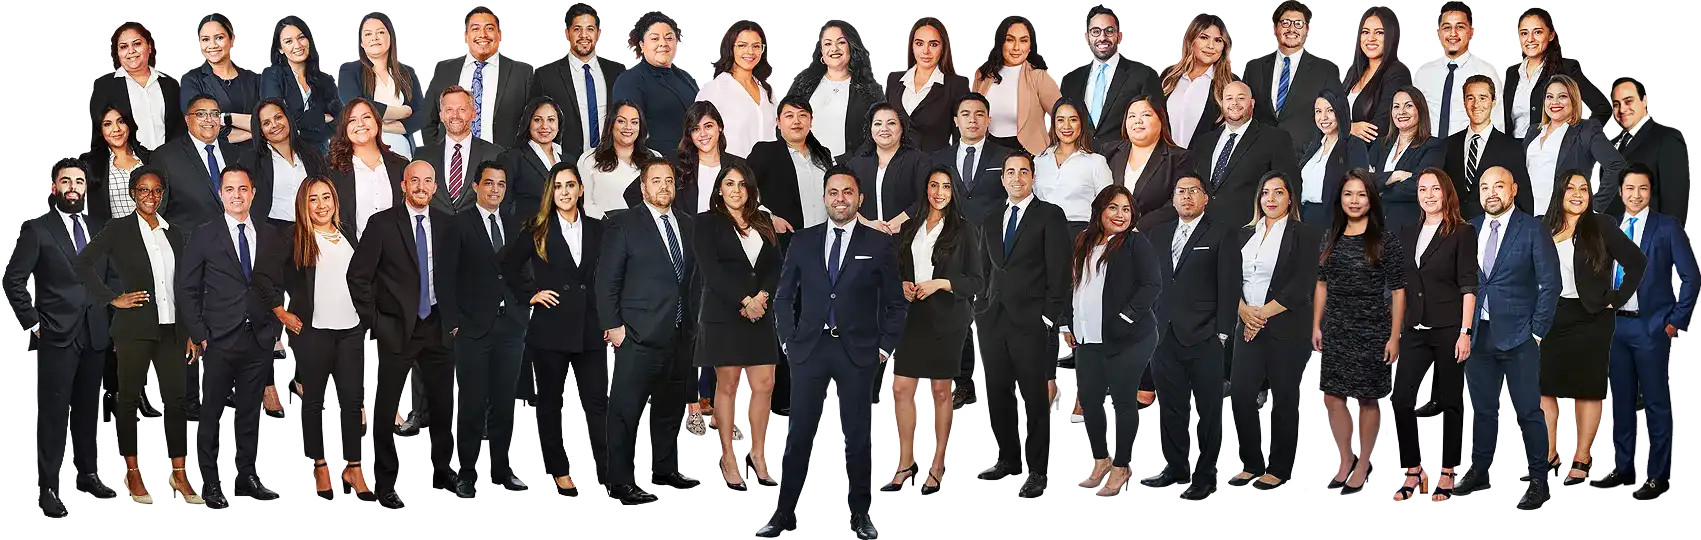 The Arast Law Team